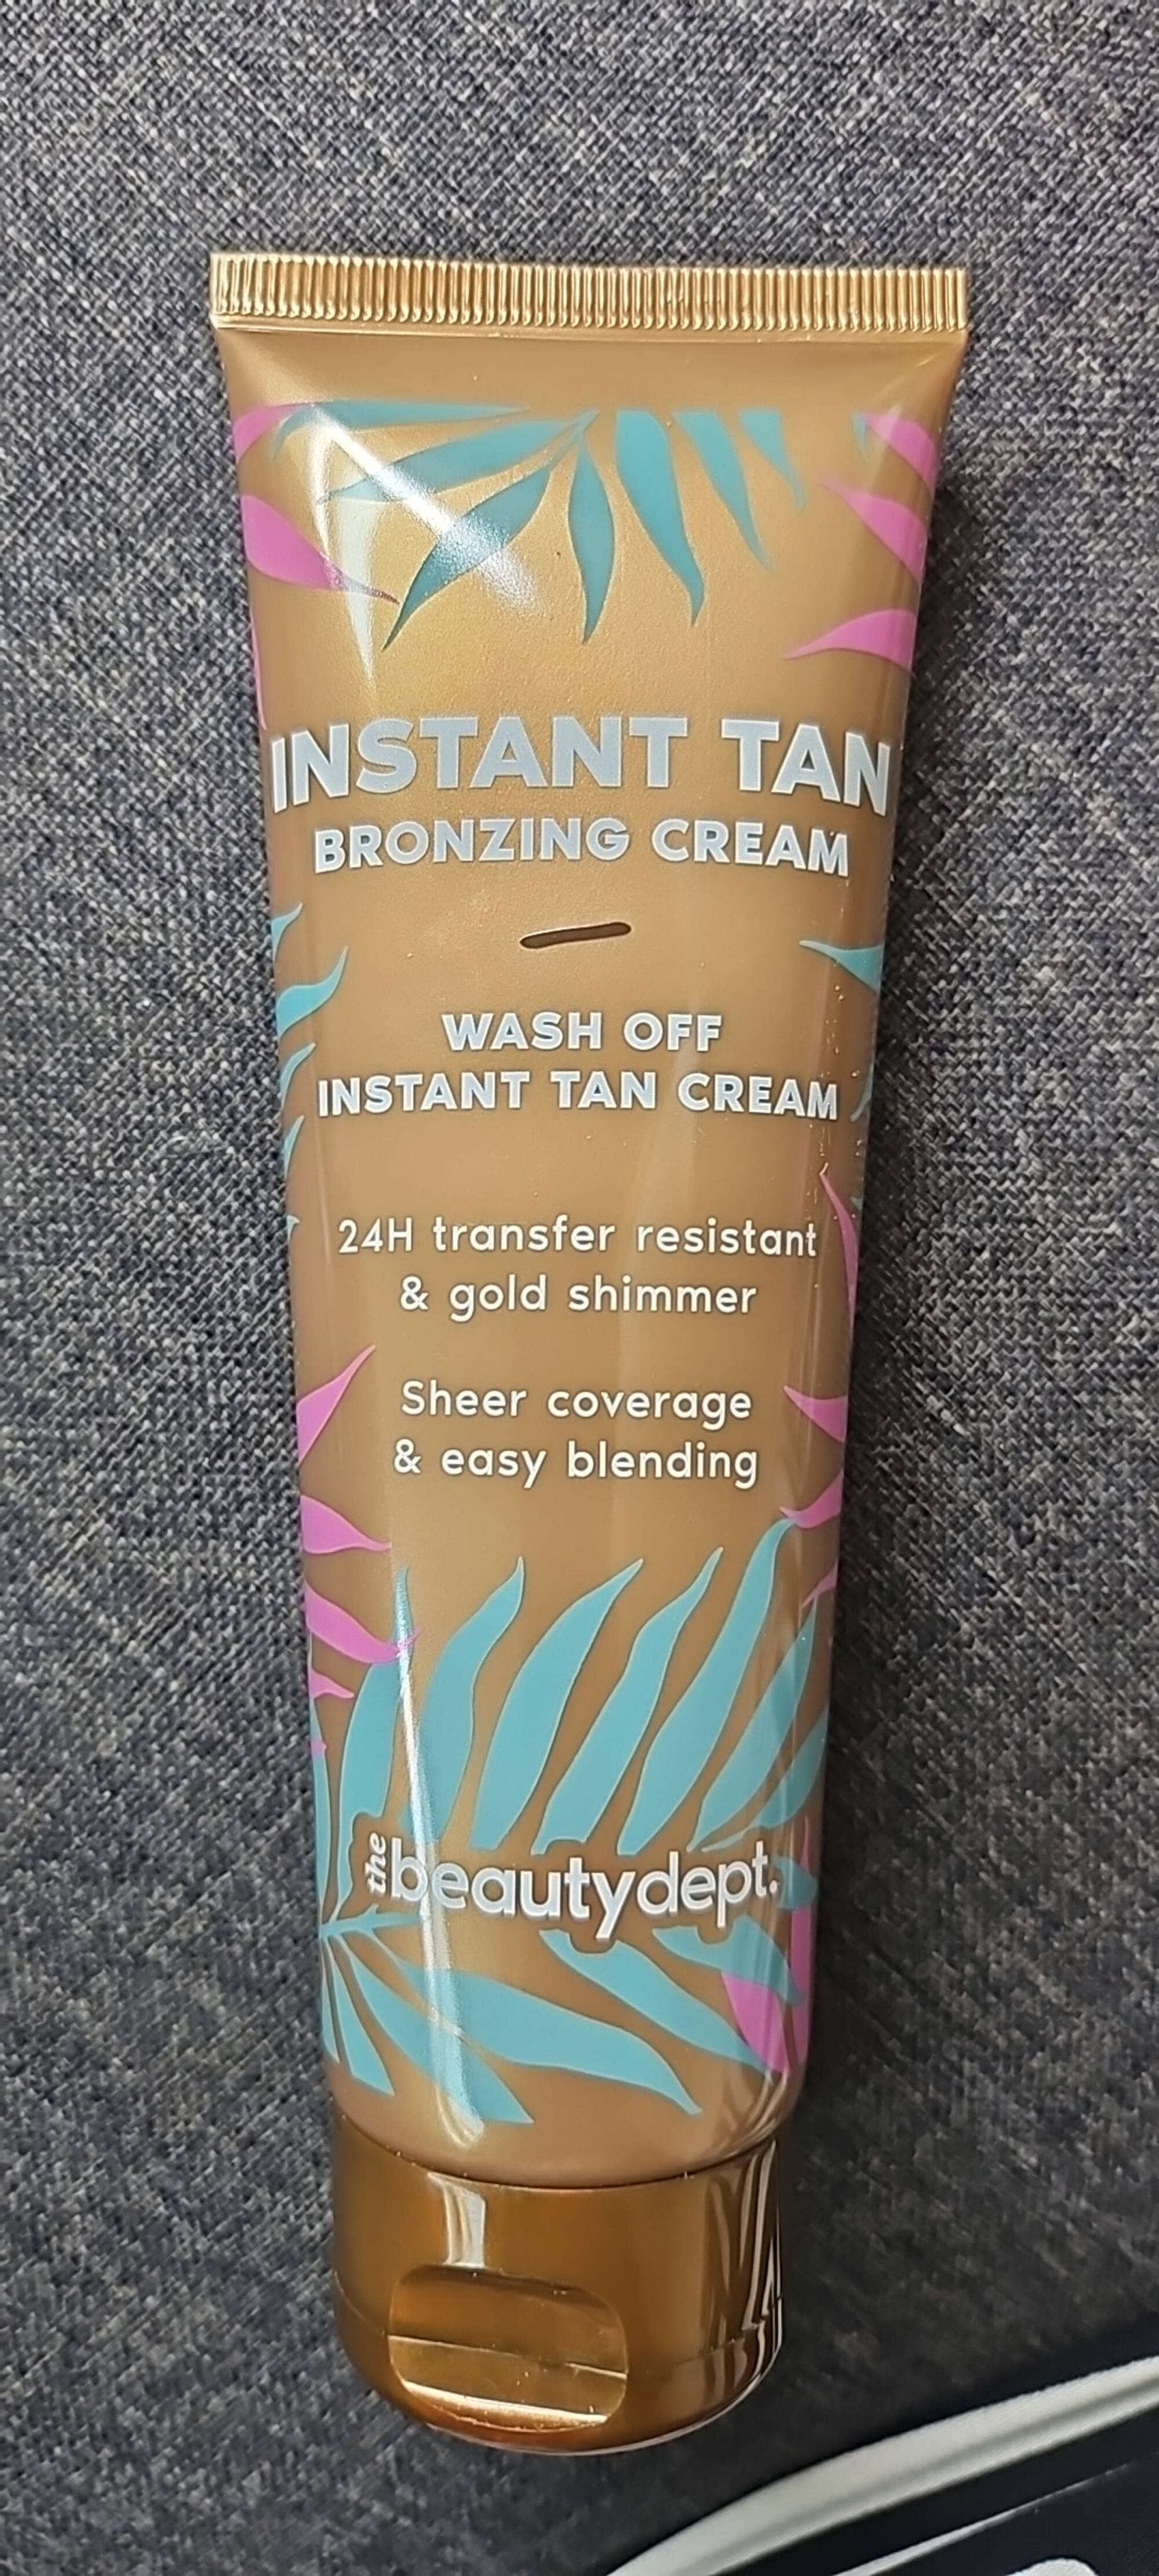 THE BEAUTY DEPT - Instant tan - Bronzing cream